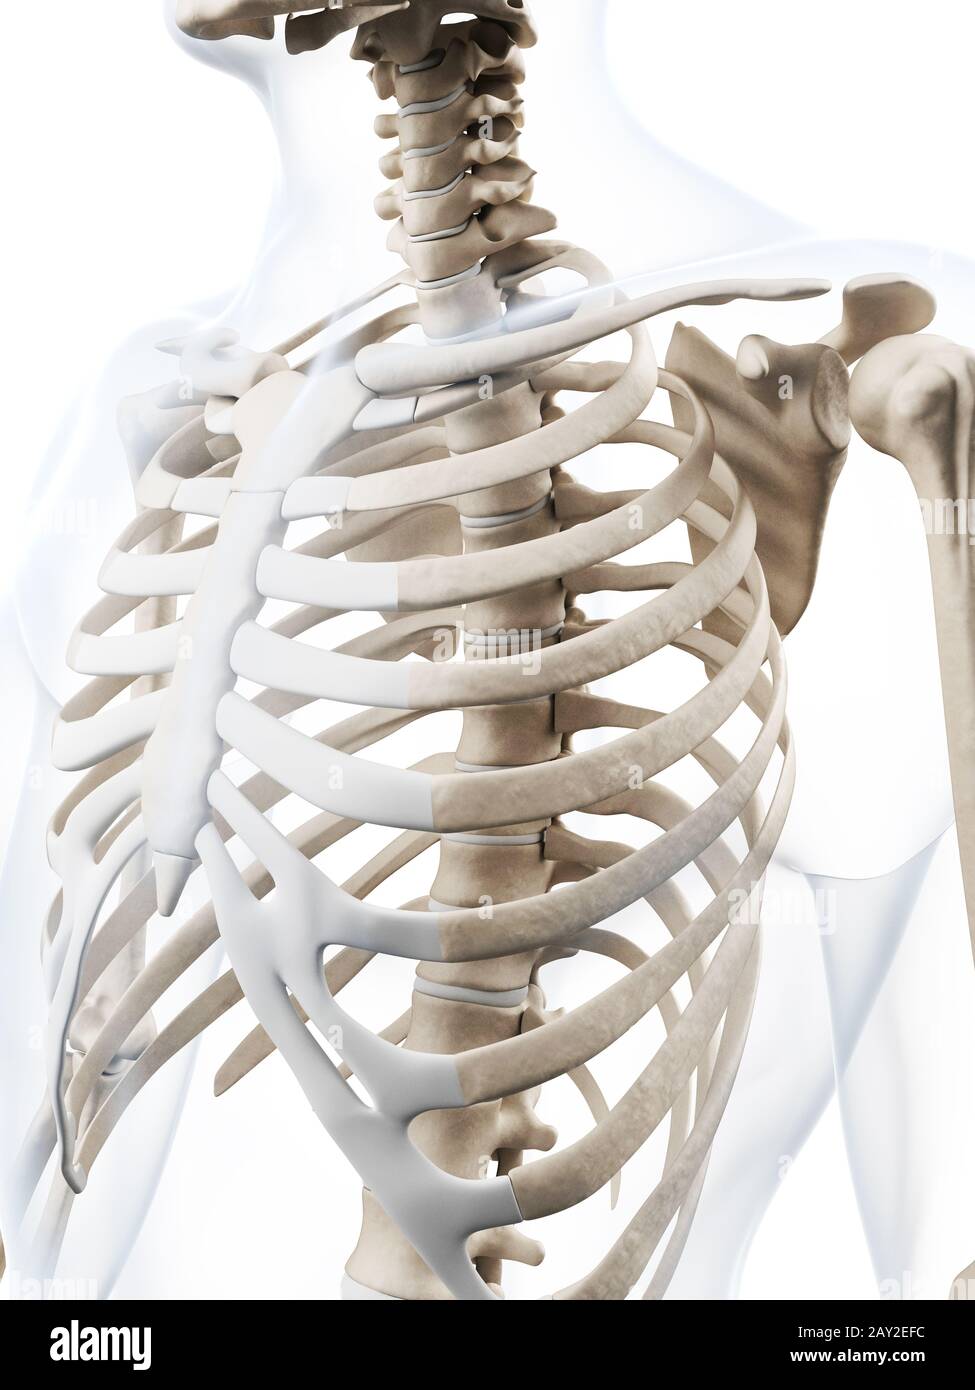 3d rendered illustration of the human skeleton Stock Photo